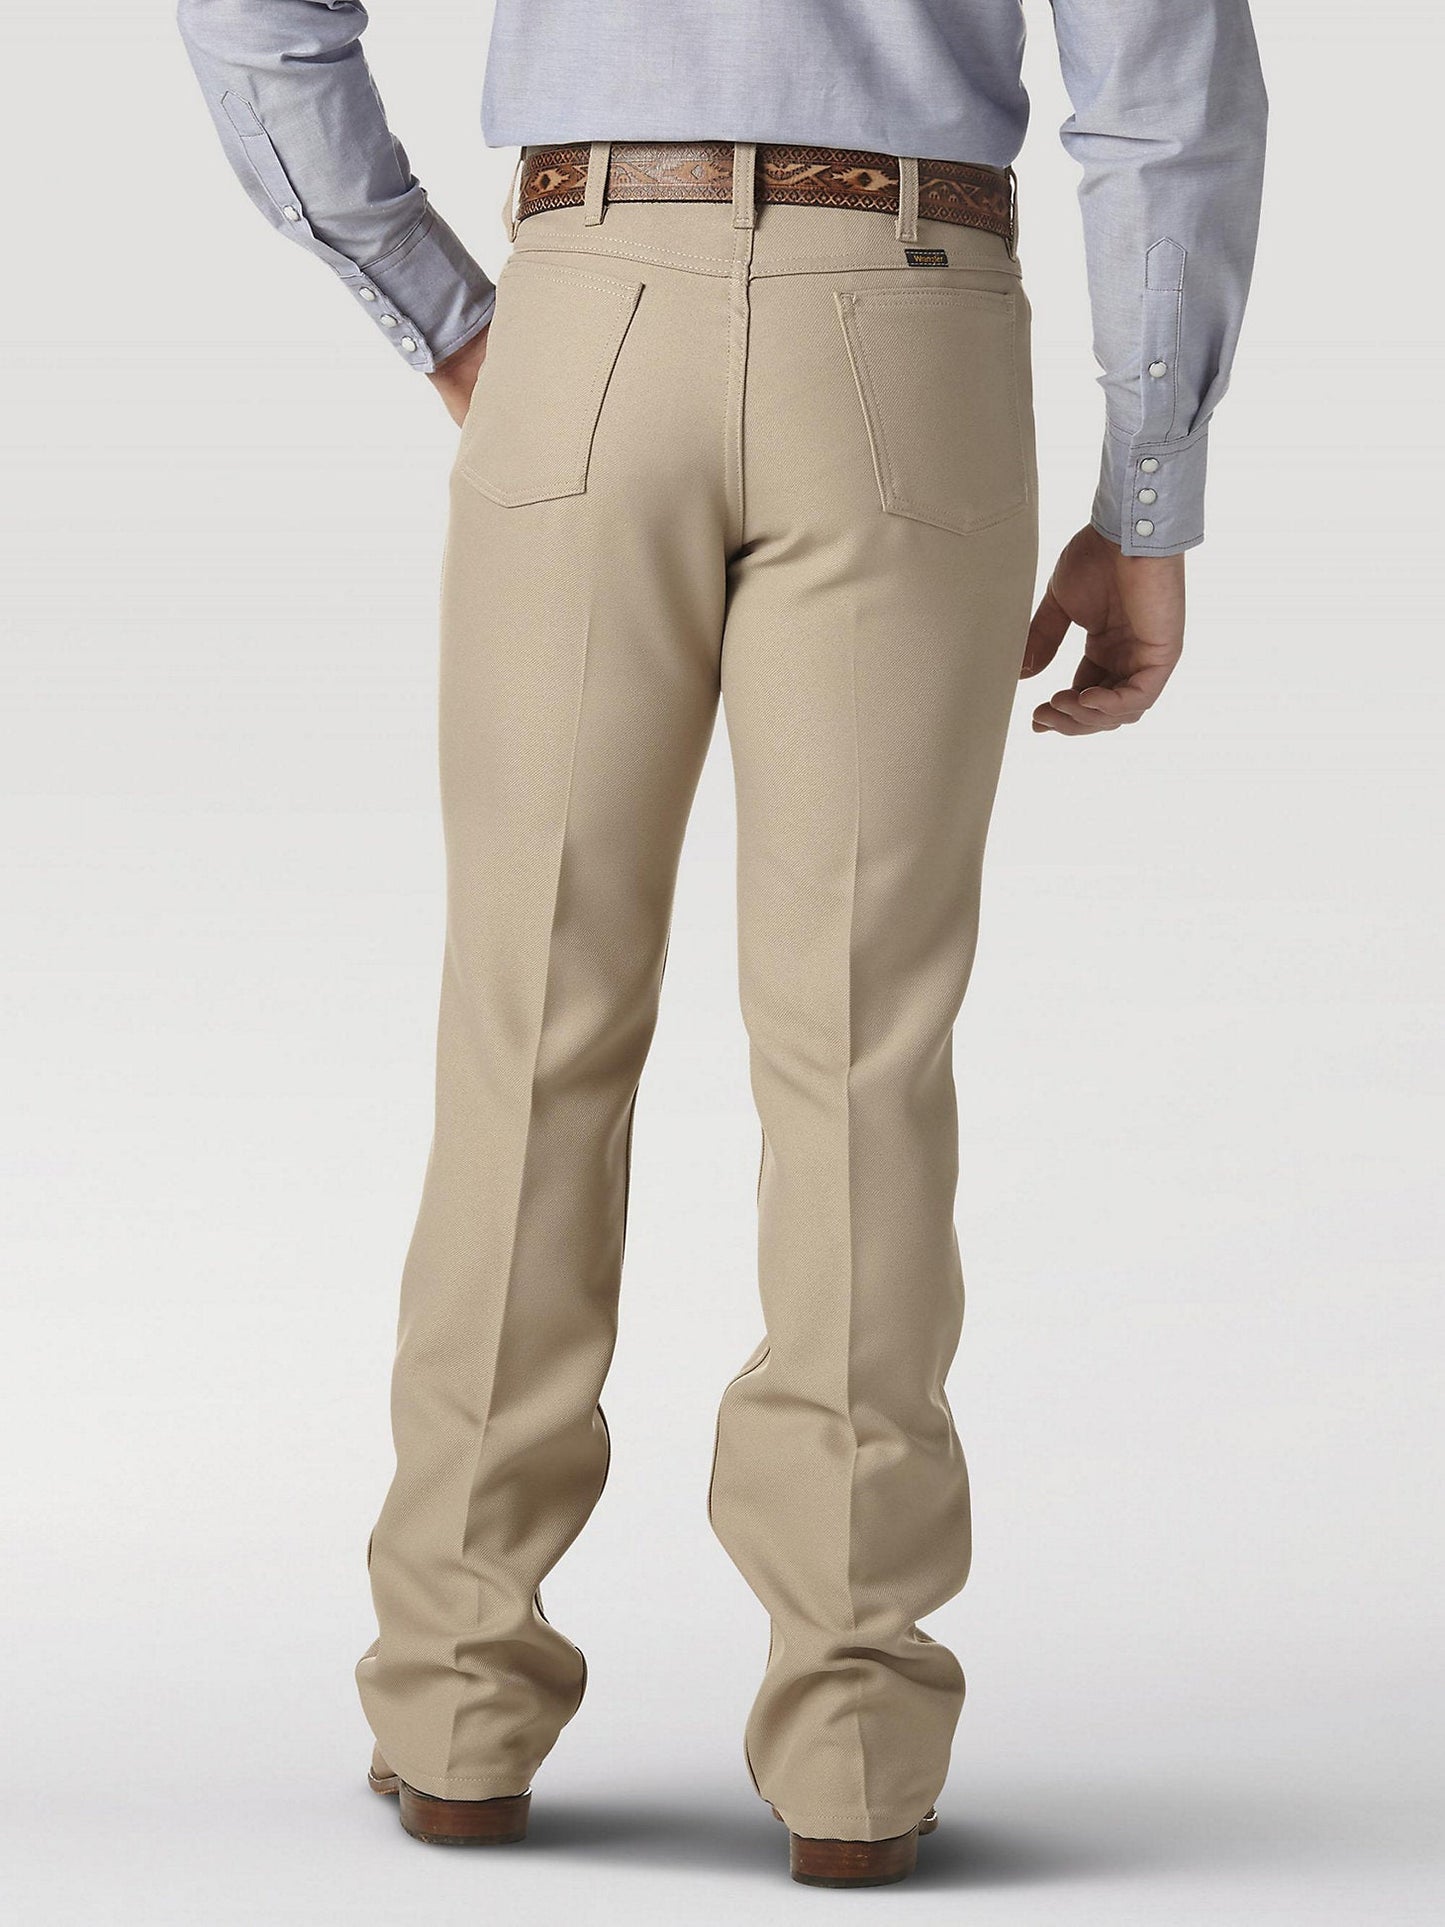 Wrangler® Men's Wrancher® Western Dress Pants - Solid Navy / Khaki